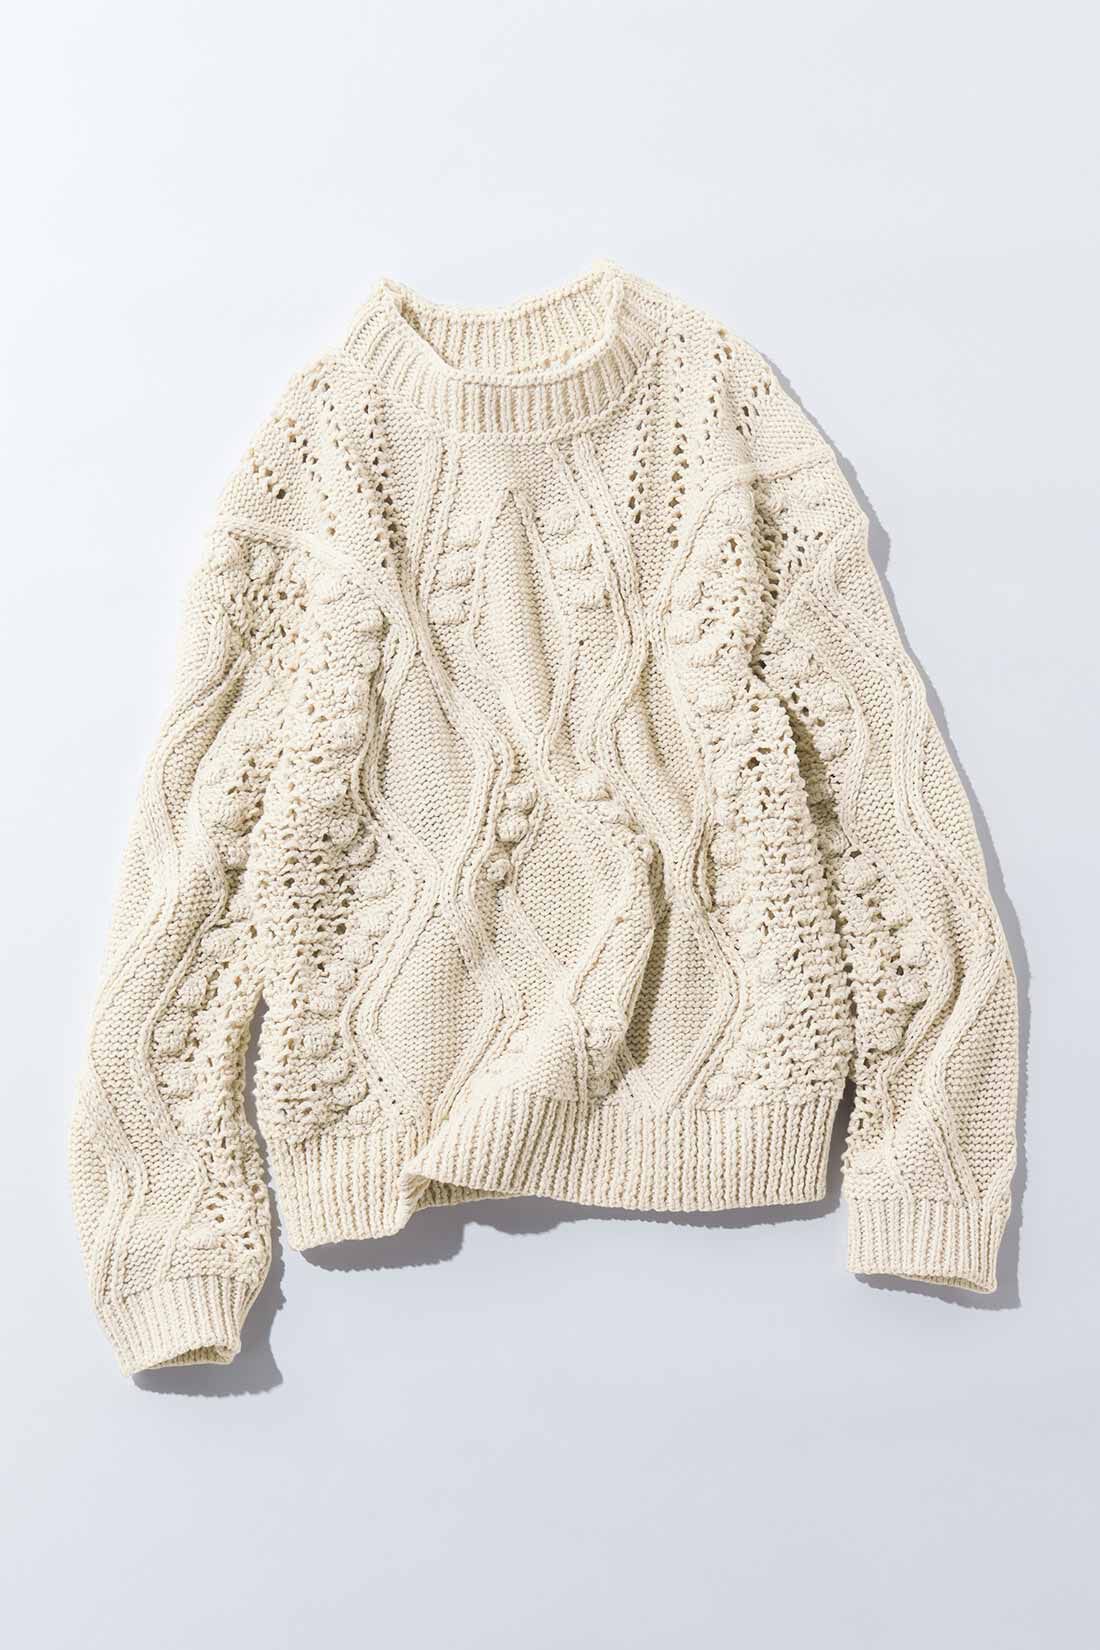 SPUNNY ニット セーター  ヴィンテージ レディース knit M